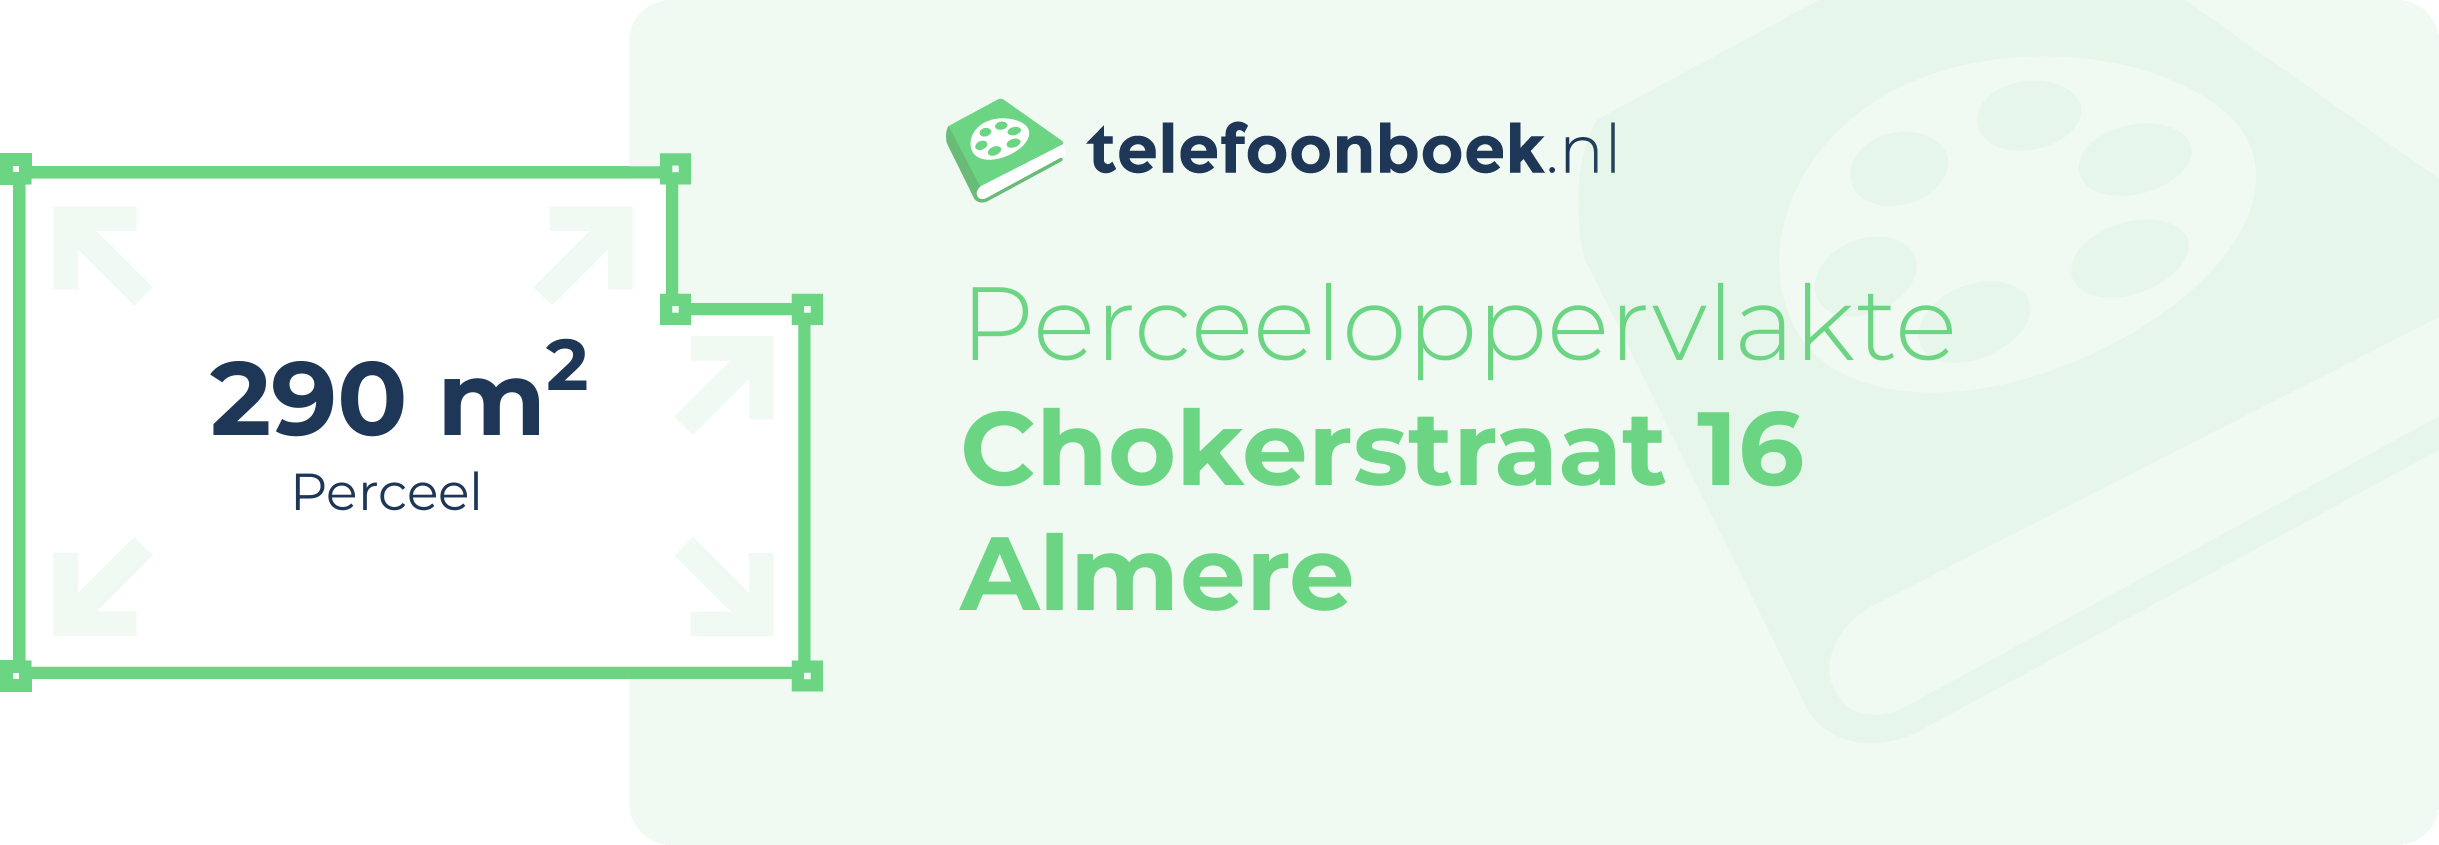 Perceeloppervlakte Chokerstraat 16 Almere